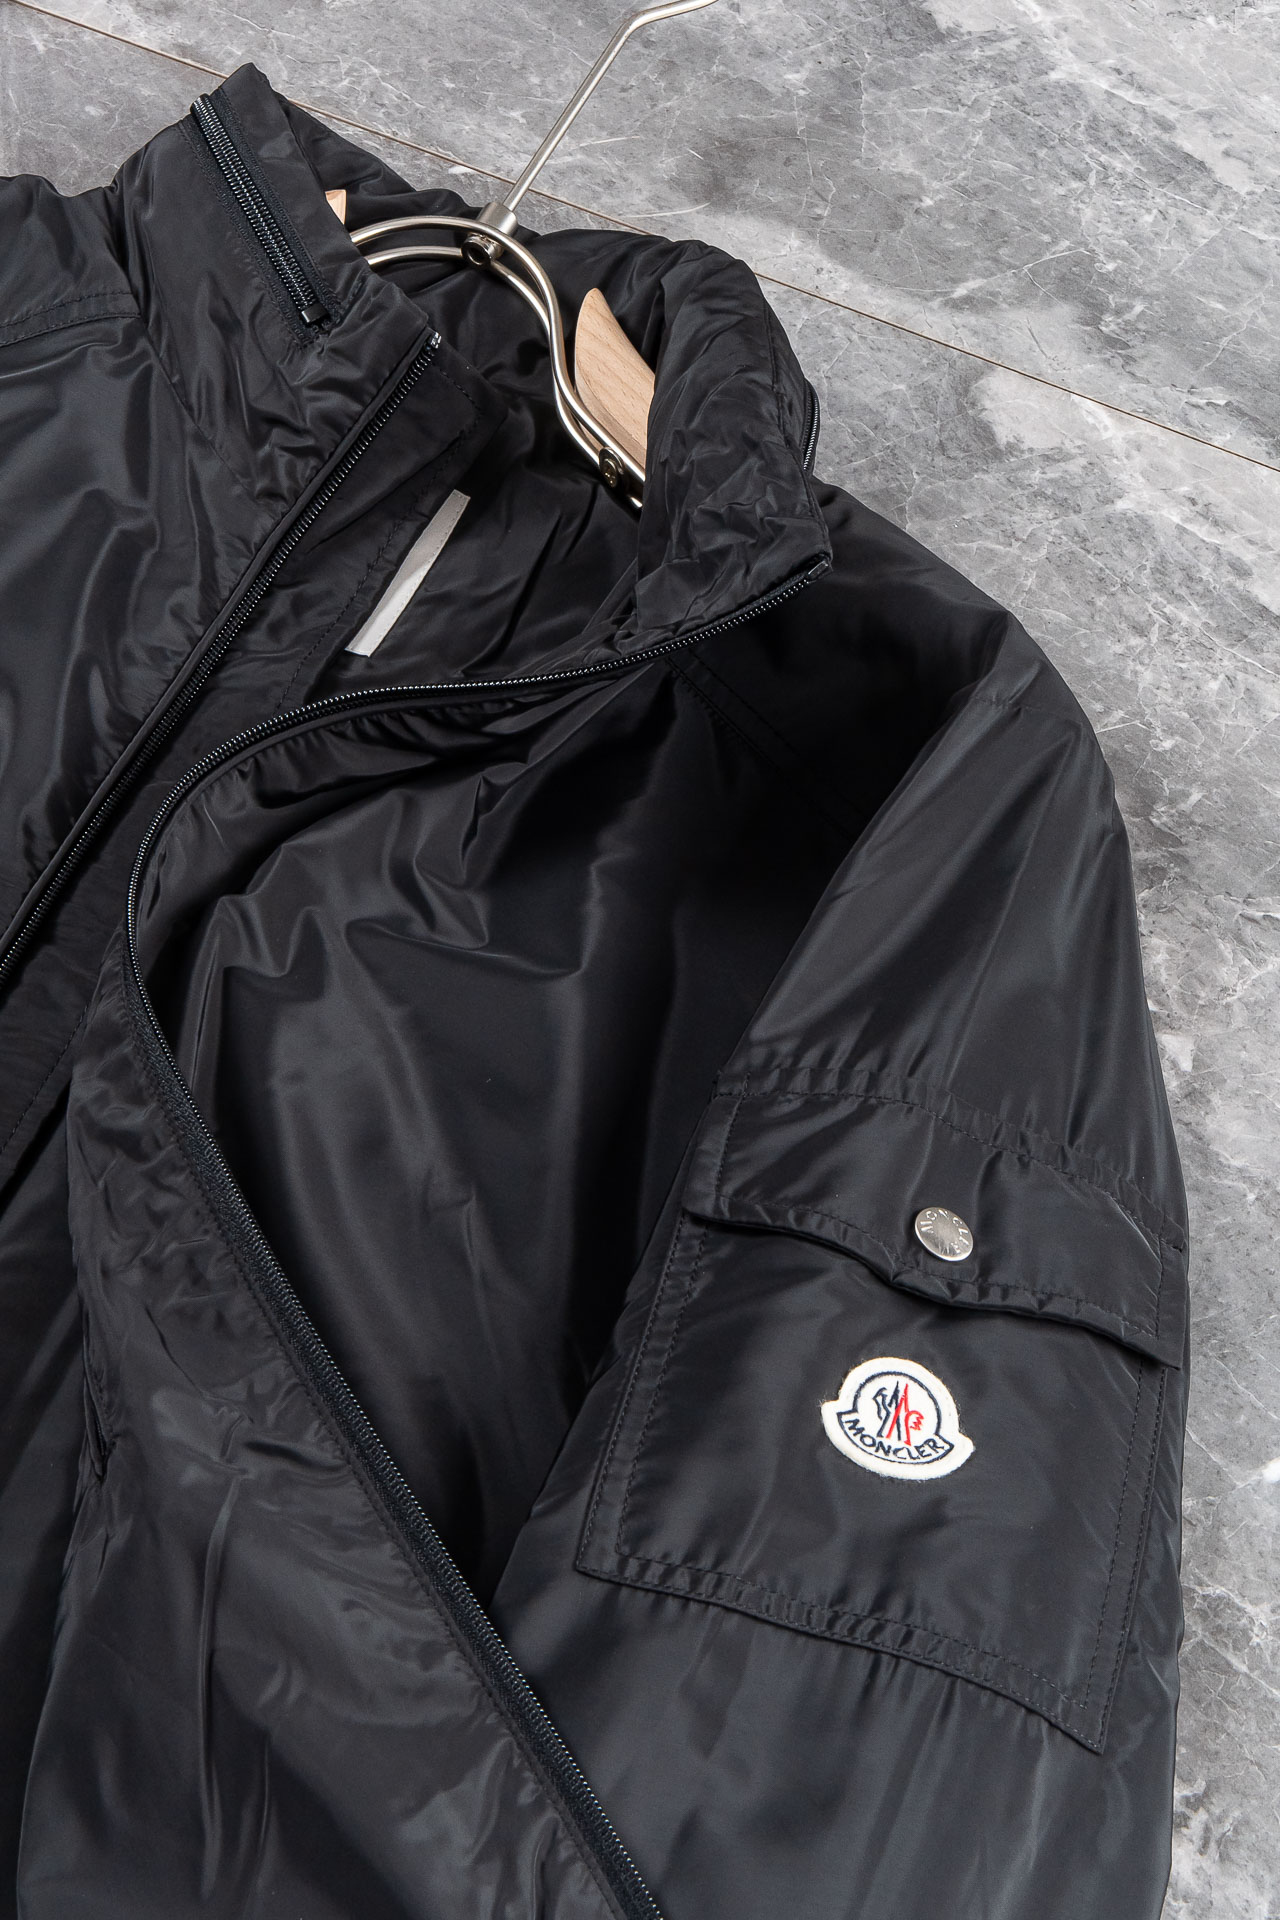 New#m1️蒙口MONCL*R24SS防水夹克隐藏连帽外套同步官网发售！仅在柜台发售的顶尖限量单品！该